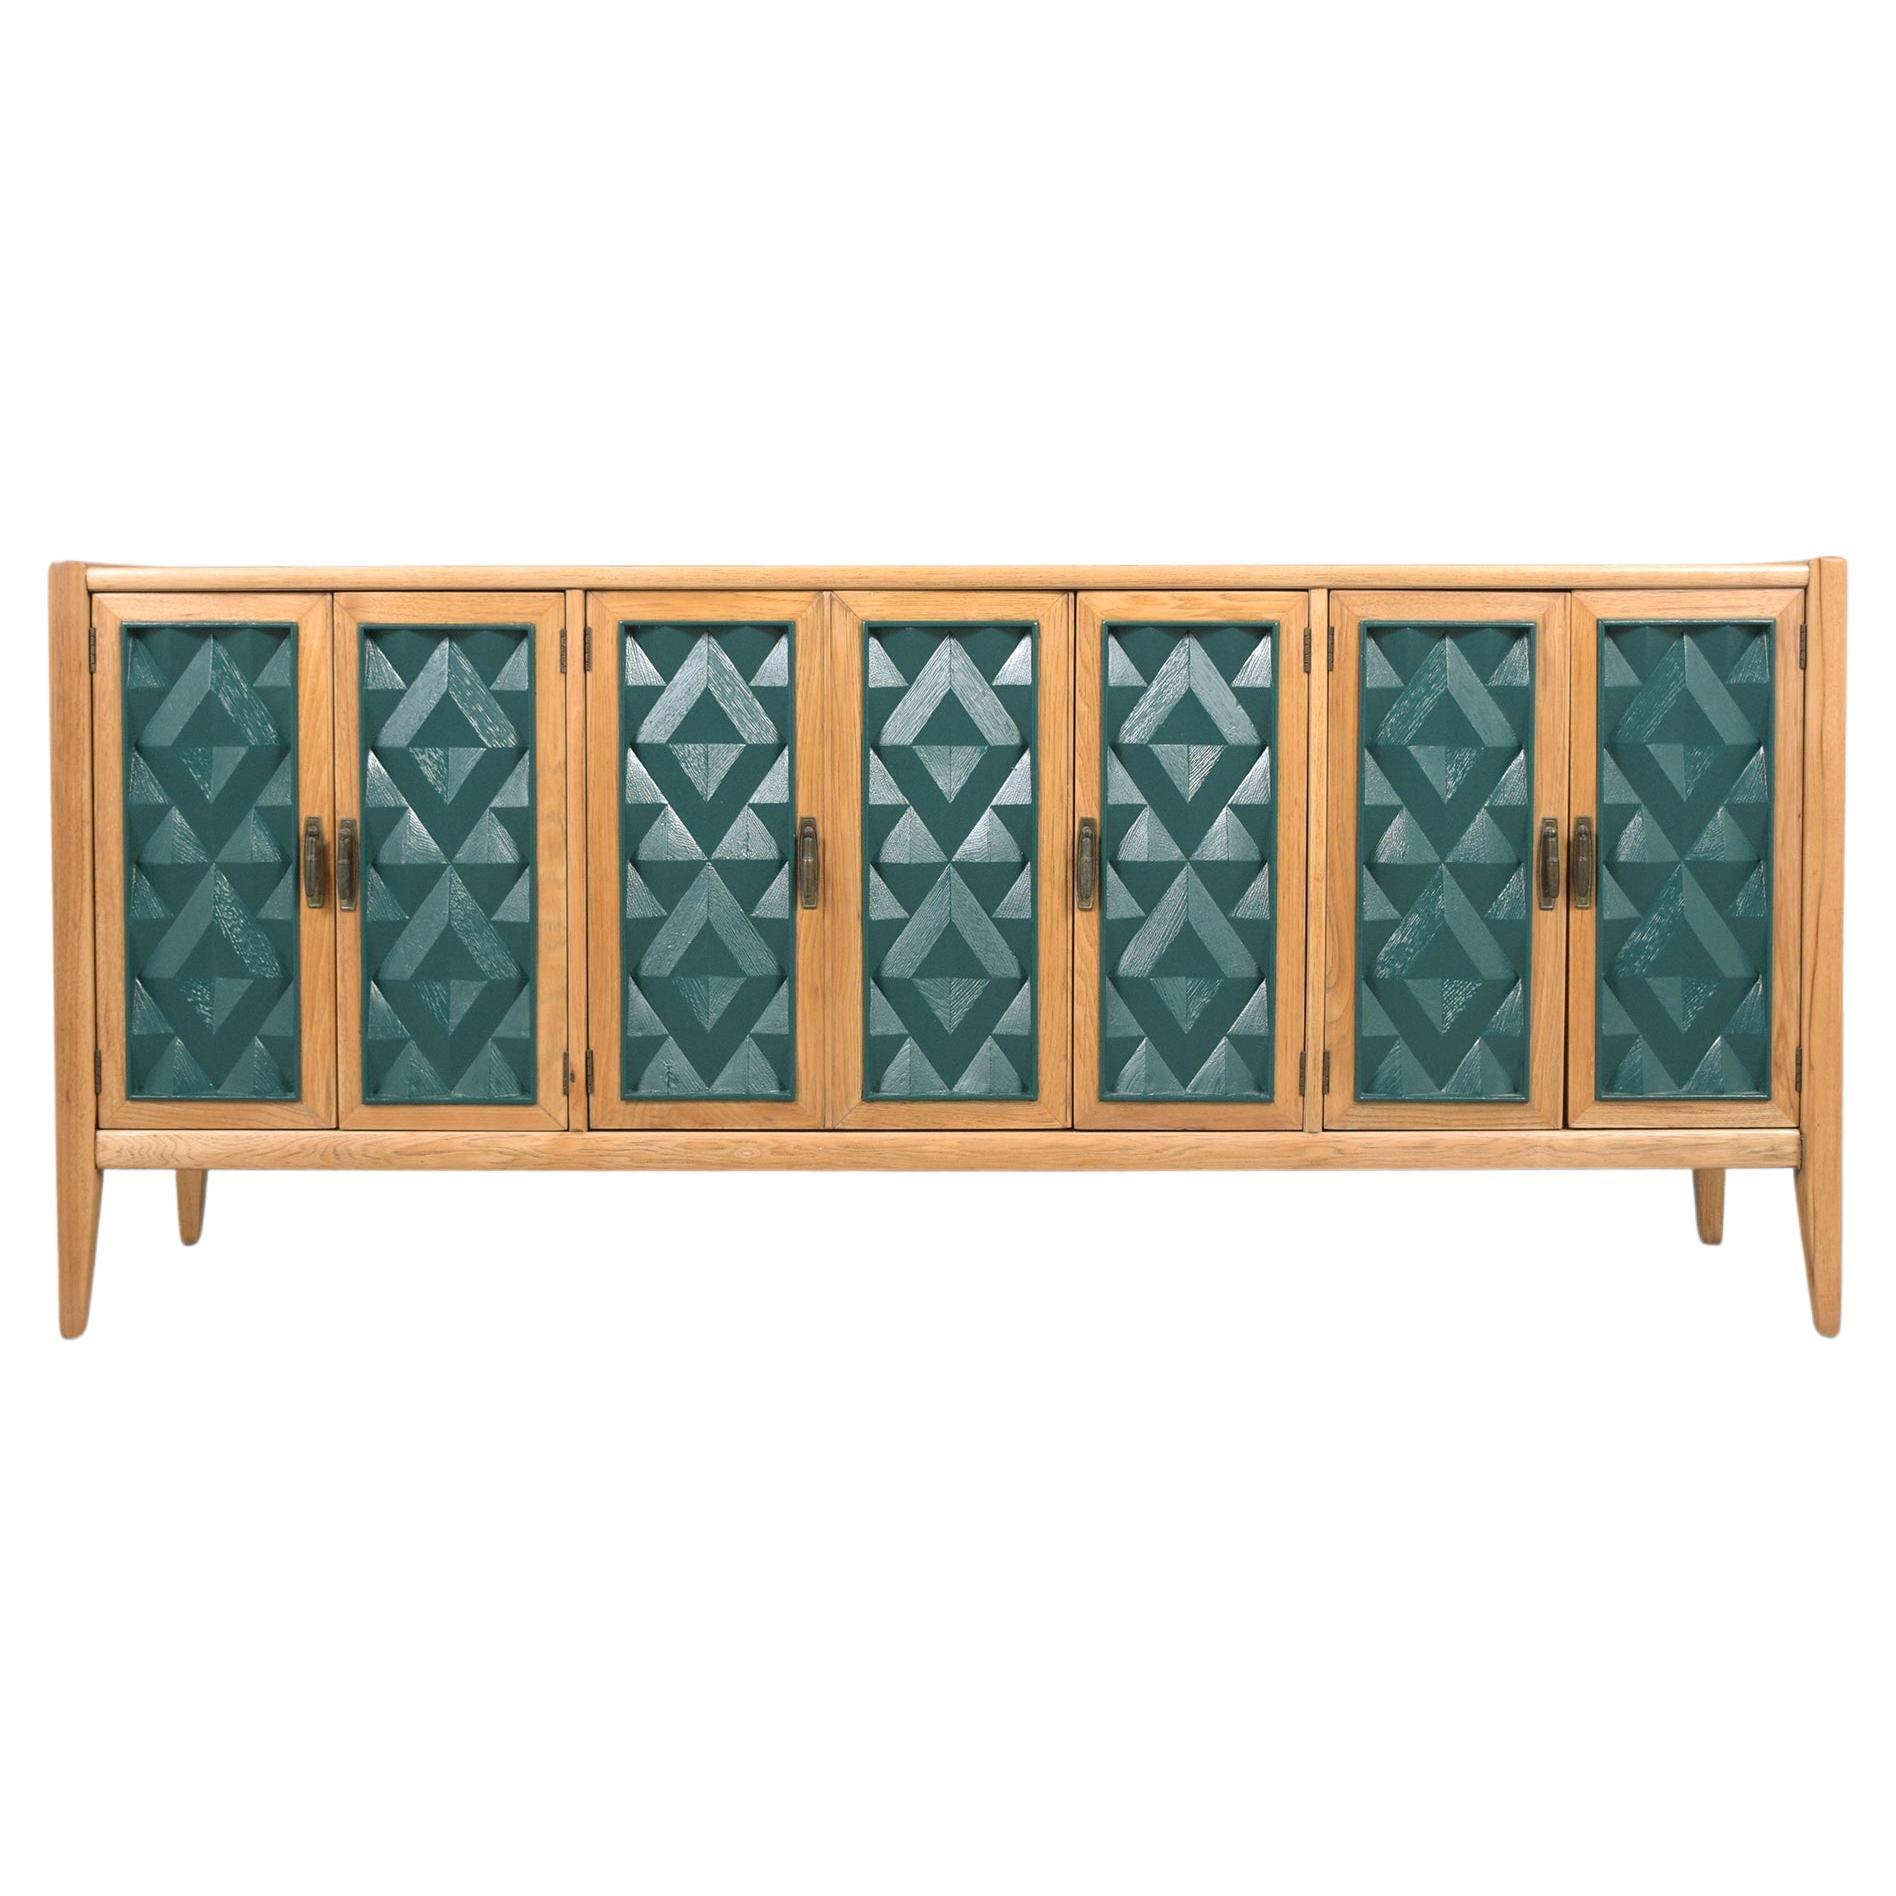 1960s Mid-Century Modern Green Diamond Panel Cabinet in Lacquered Walnut